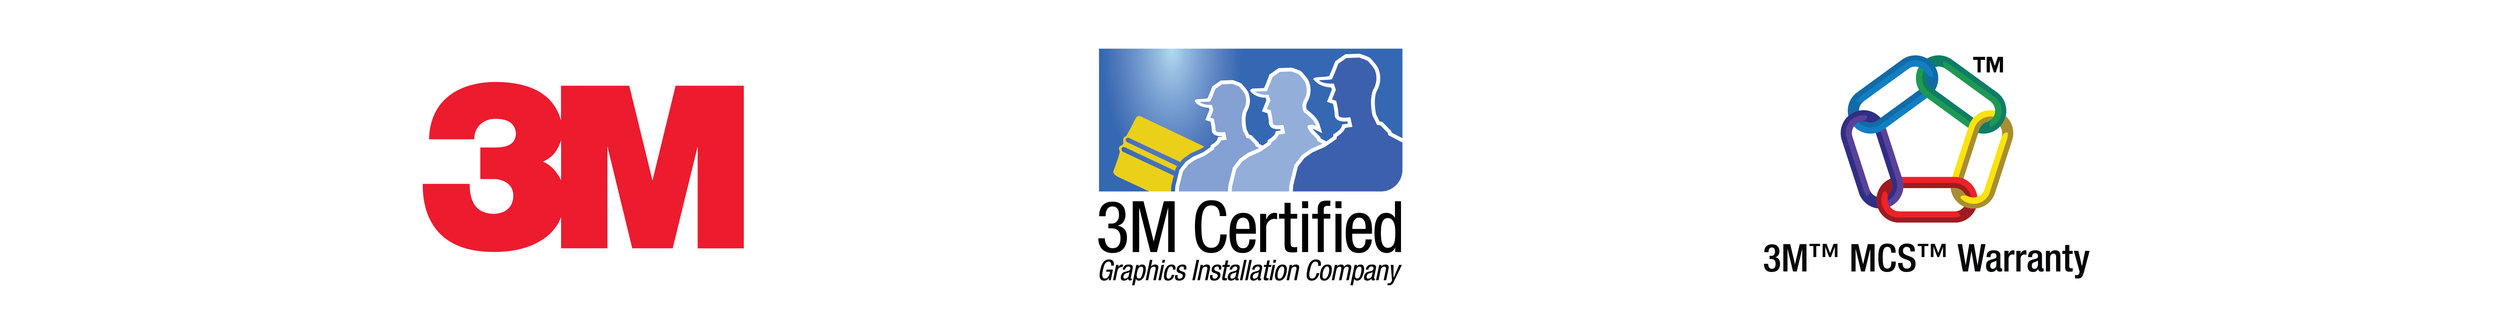 certifications_1.jpg